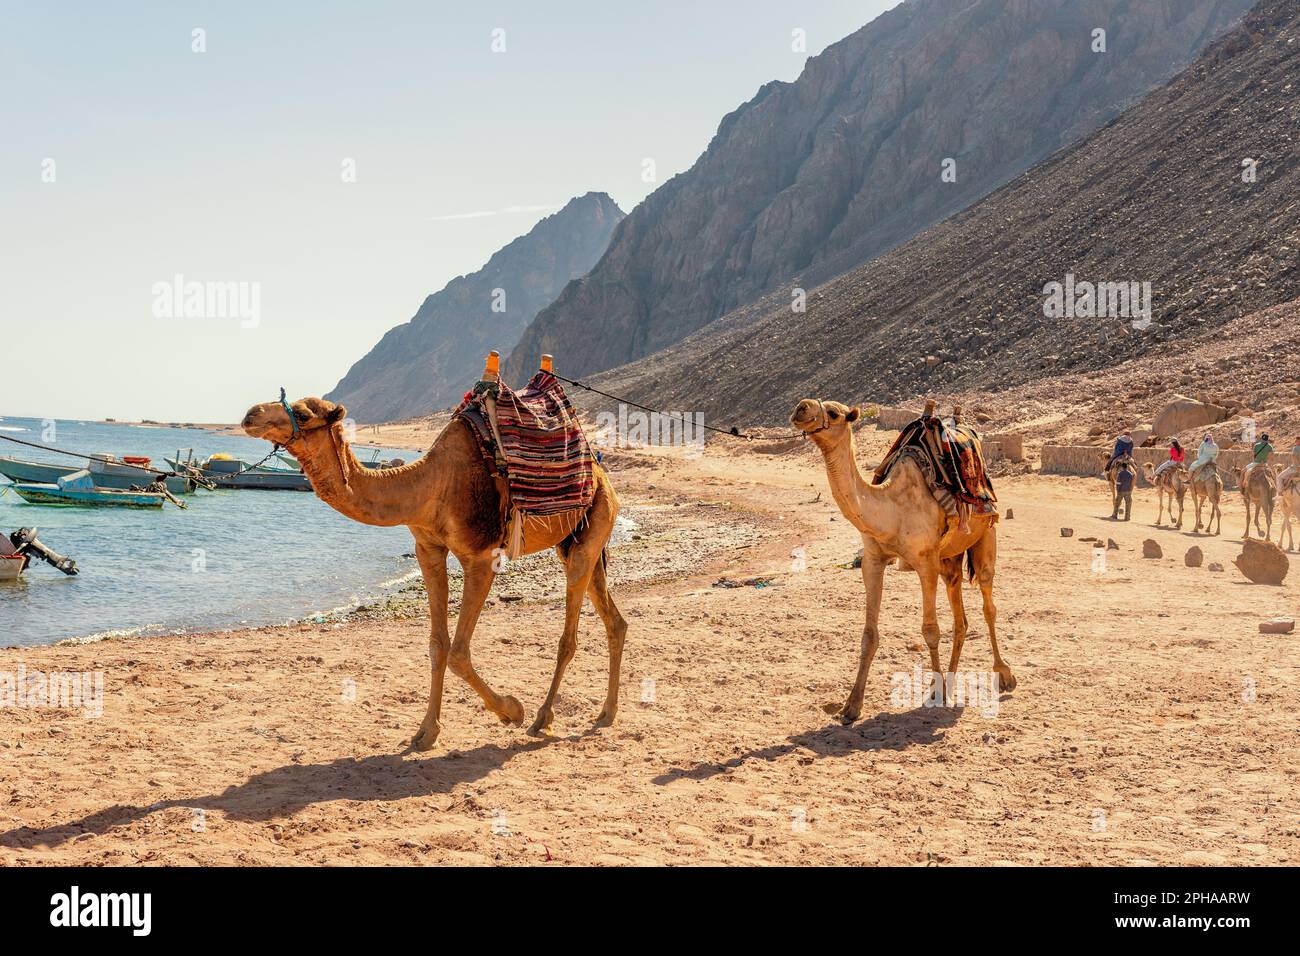 Camel caravan for tourists. A camelback Bedouin safari ride in Dahab. Egypt. Stock Photo